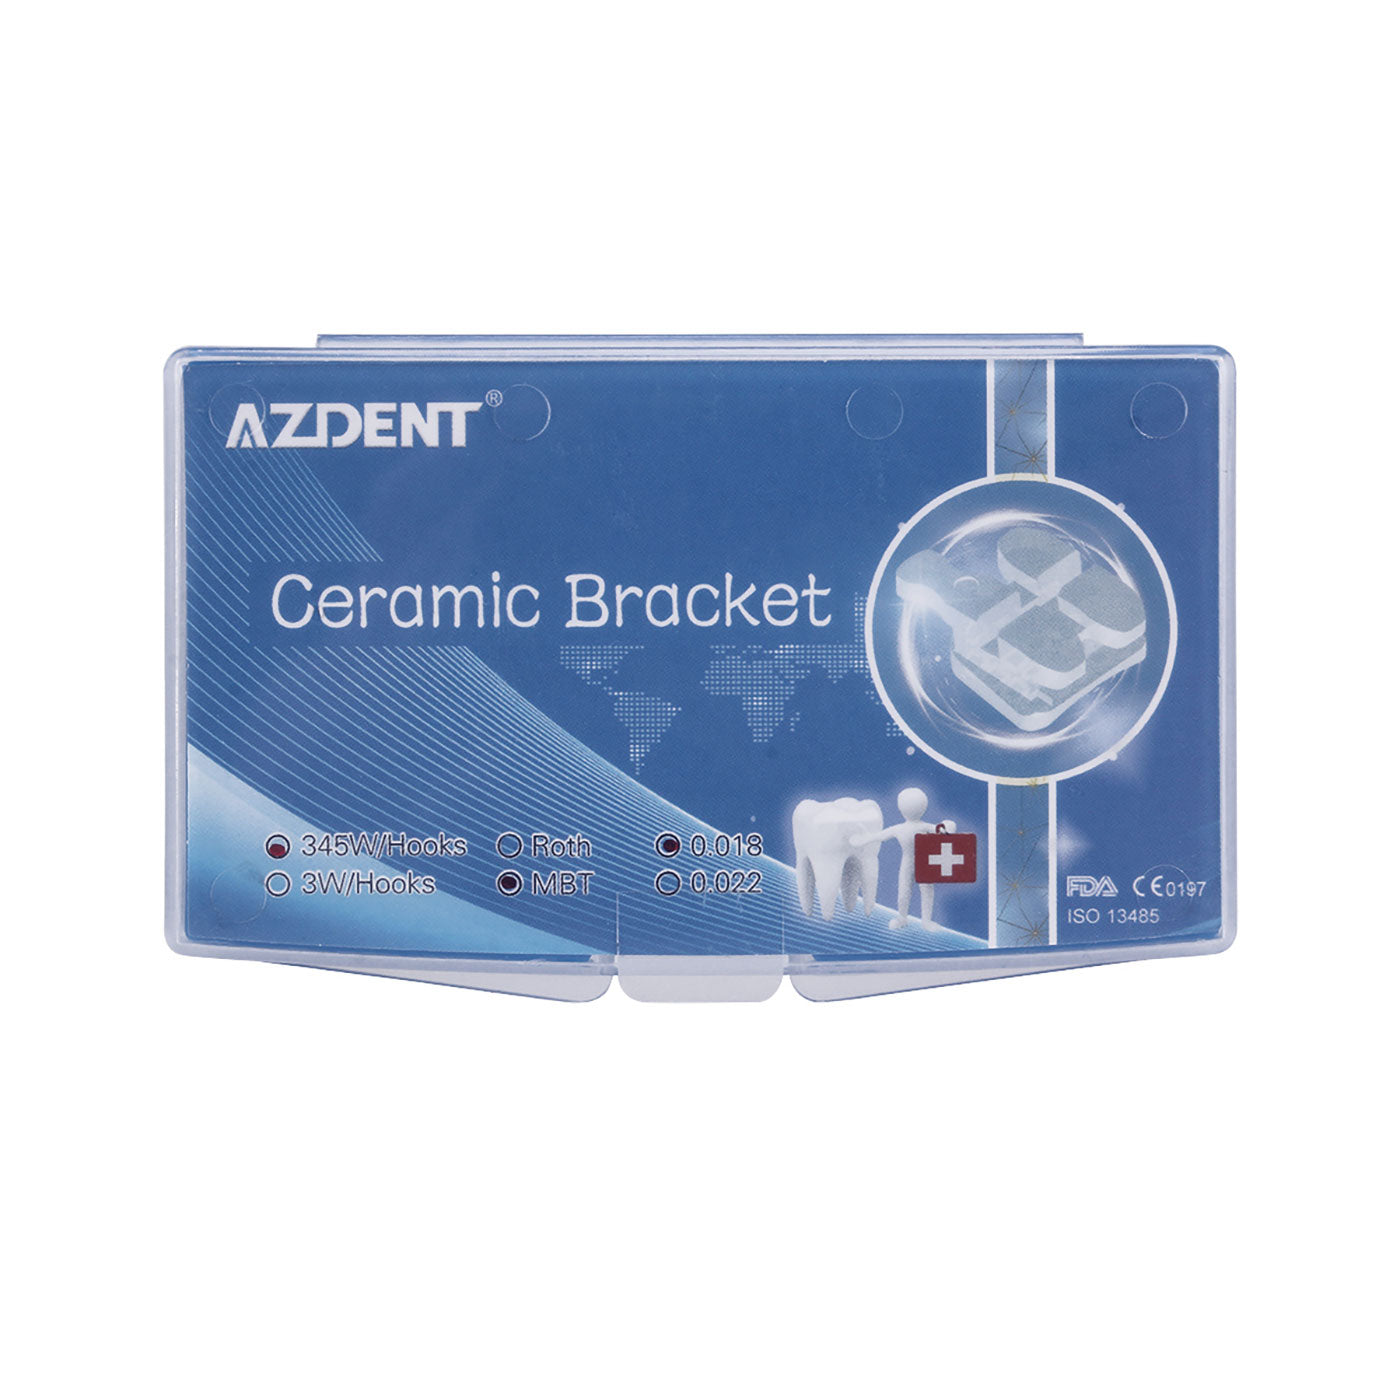 AZDENT Dental Orthodontic Ceramic Bracket MBT .018 Hooks 345 20pcs/Box - azdentall.com